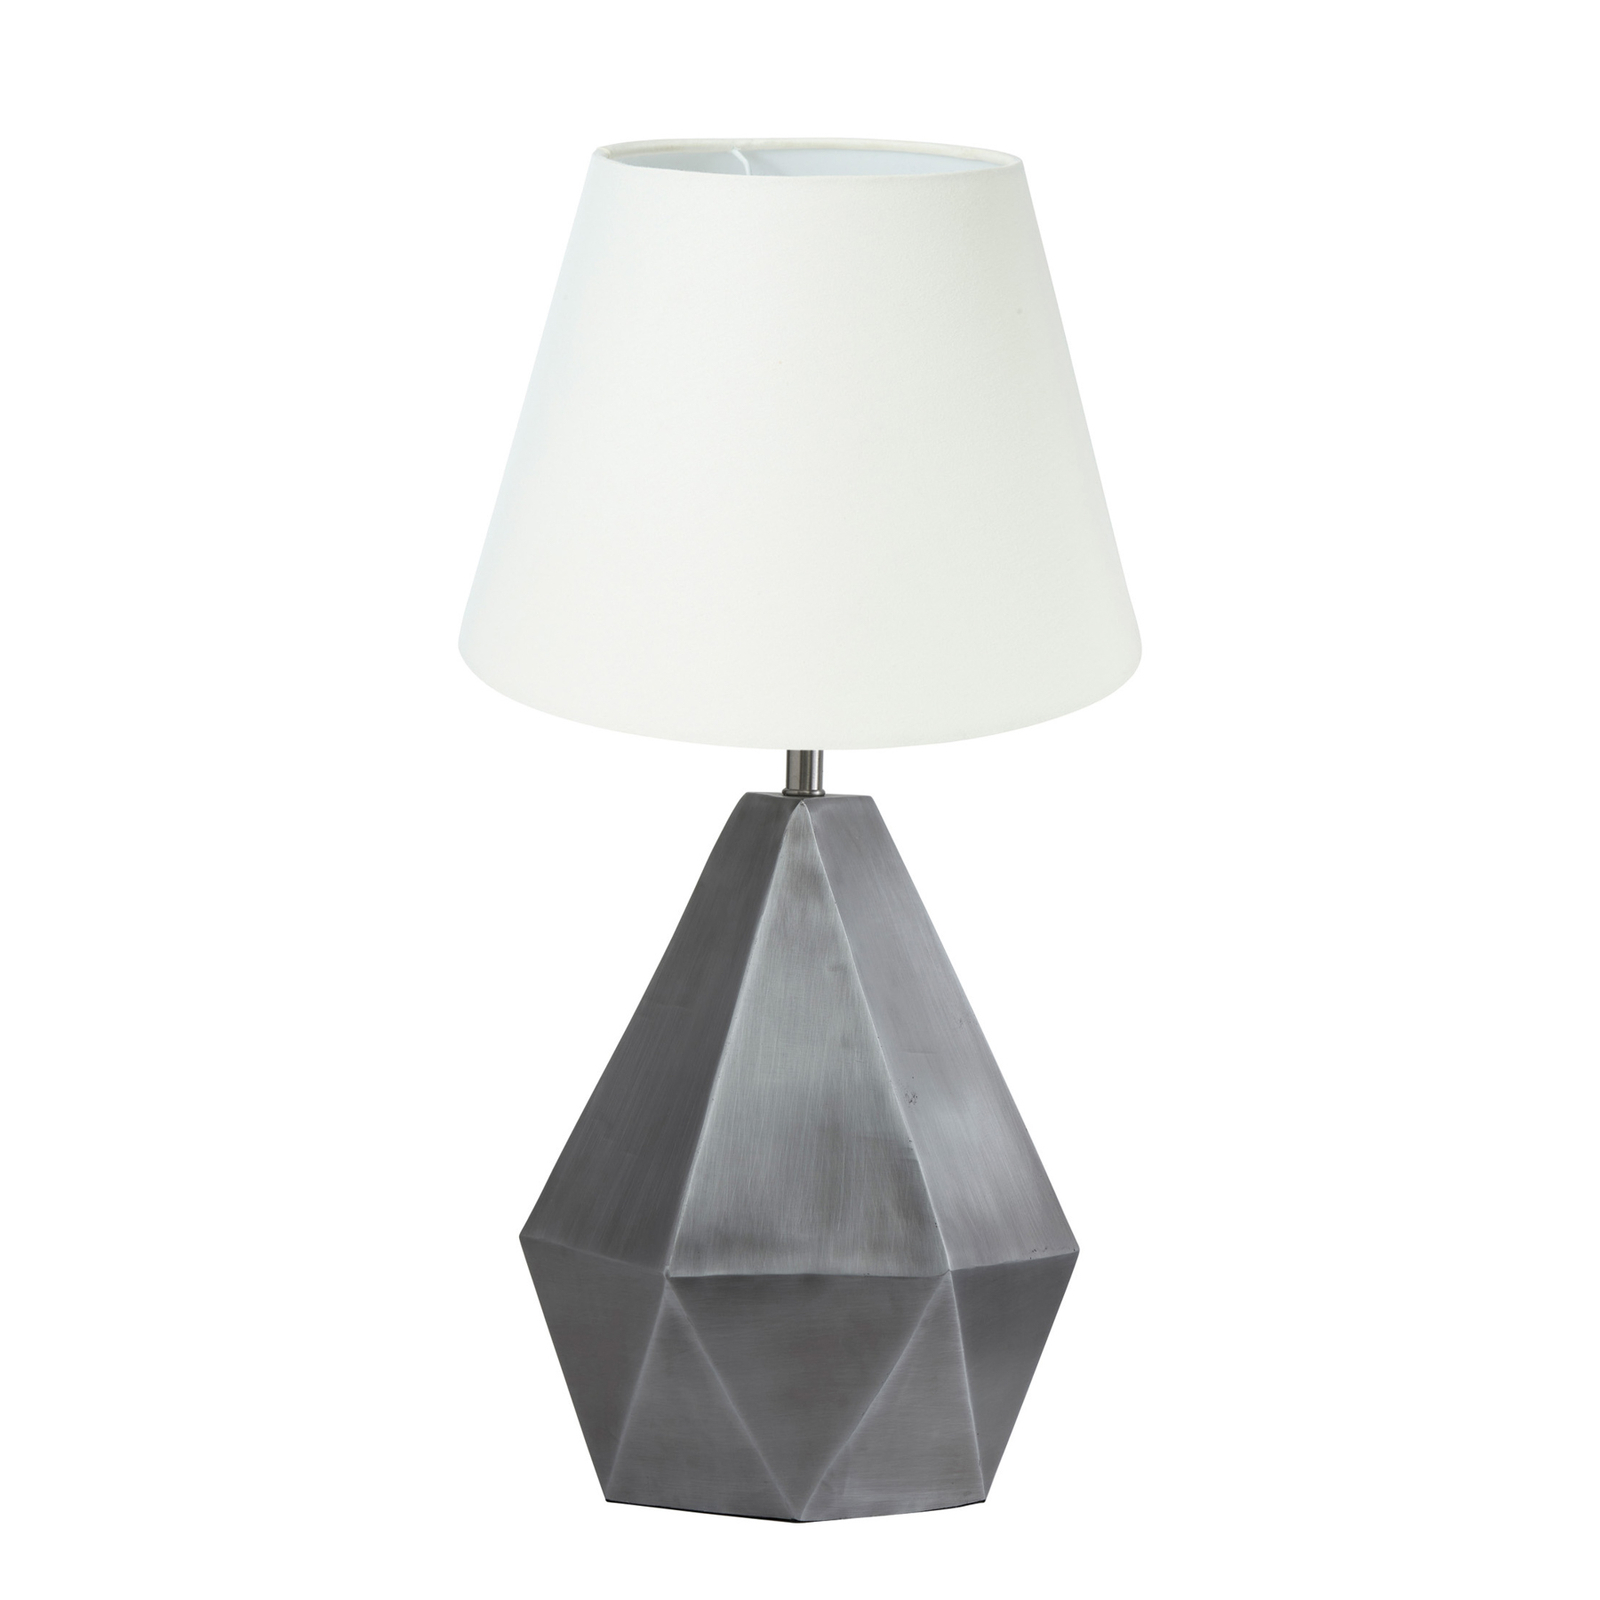 PR Home Trinity tafellamp Ø 25cm zilver/off-white